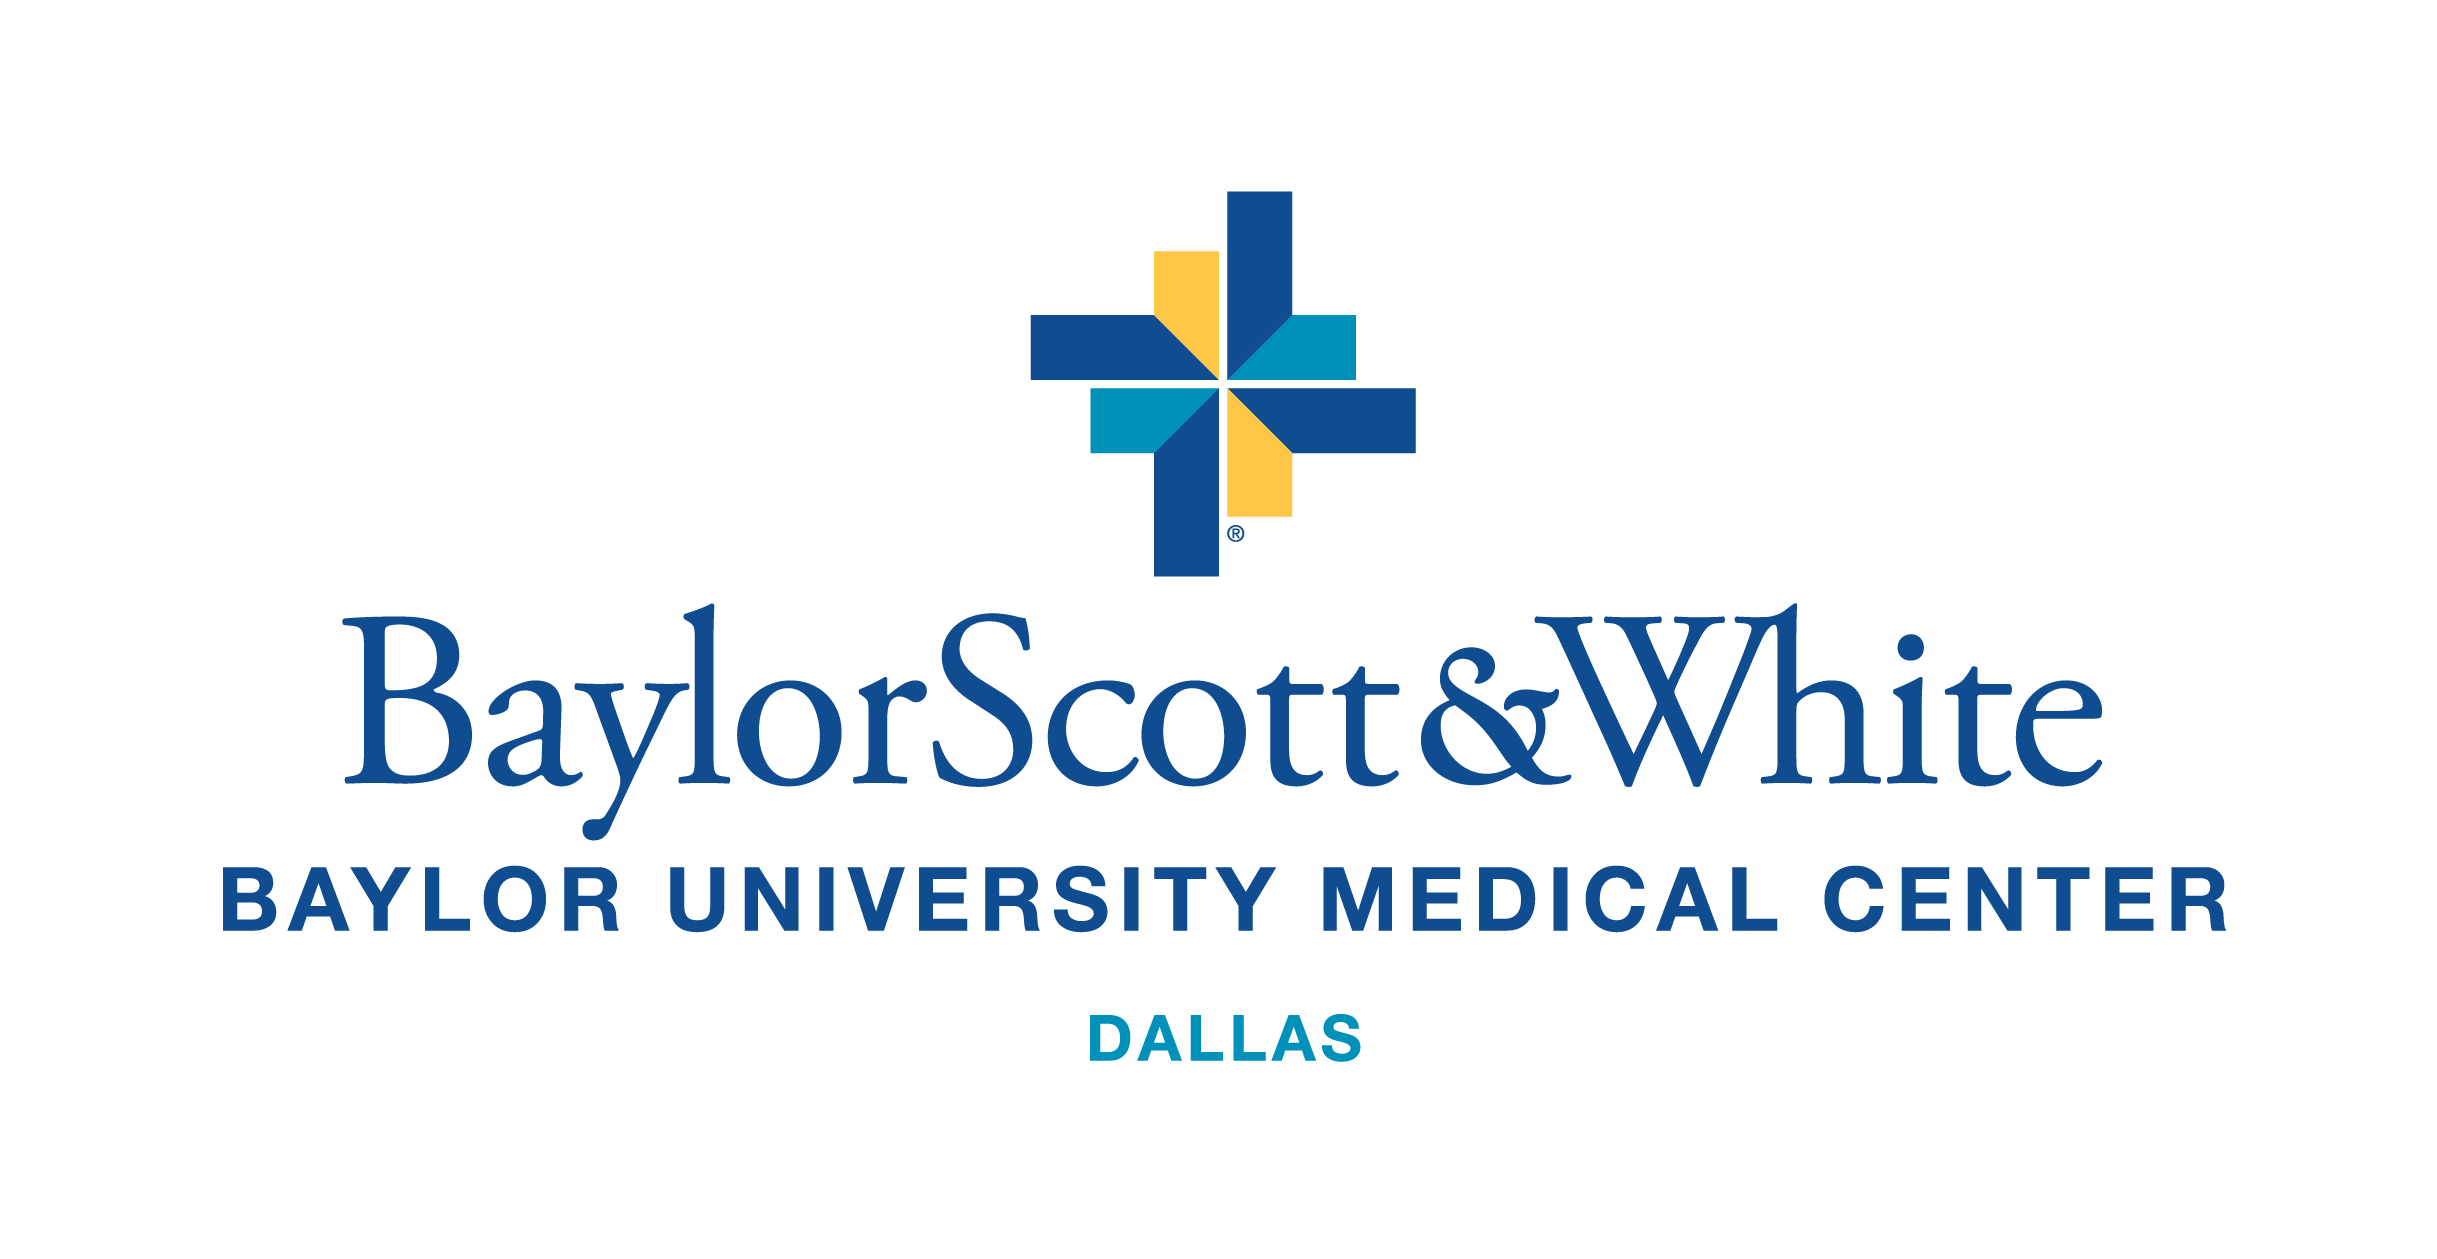 BSW Baylor University Medical Center Dallas_C_4C White Background.png